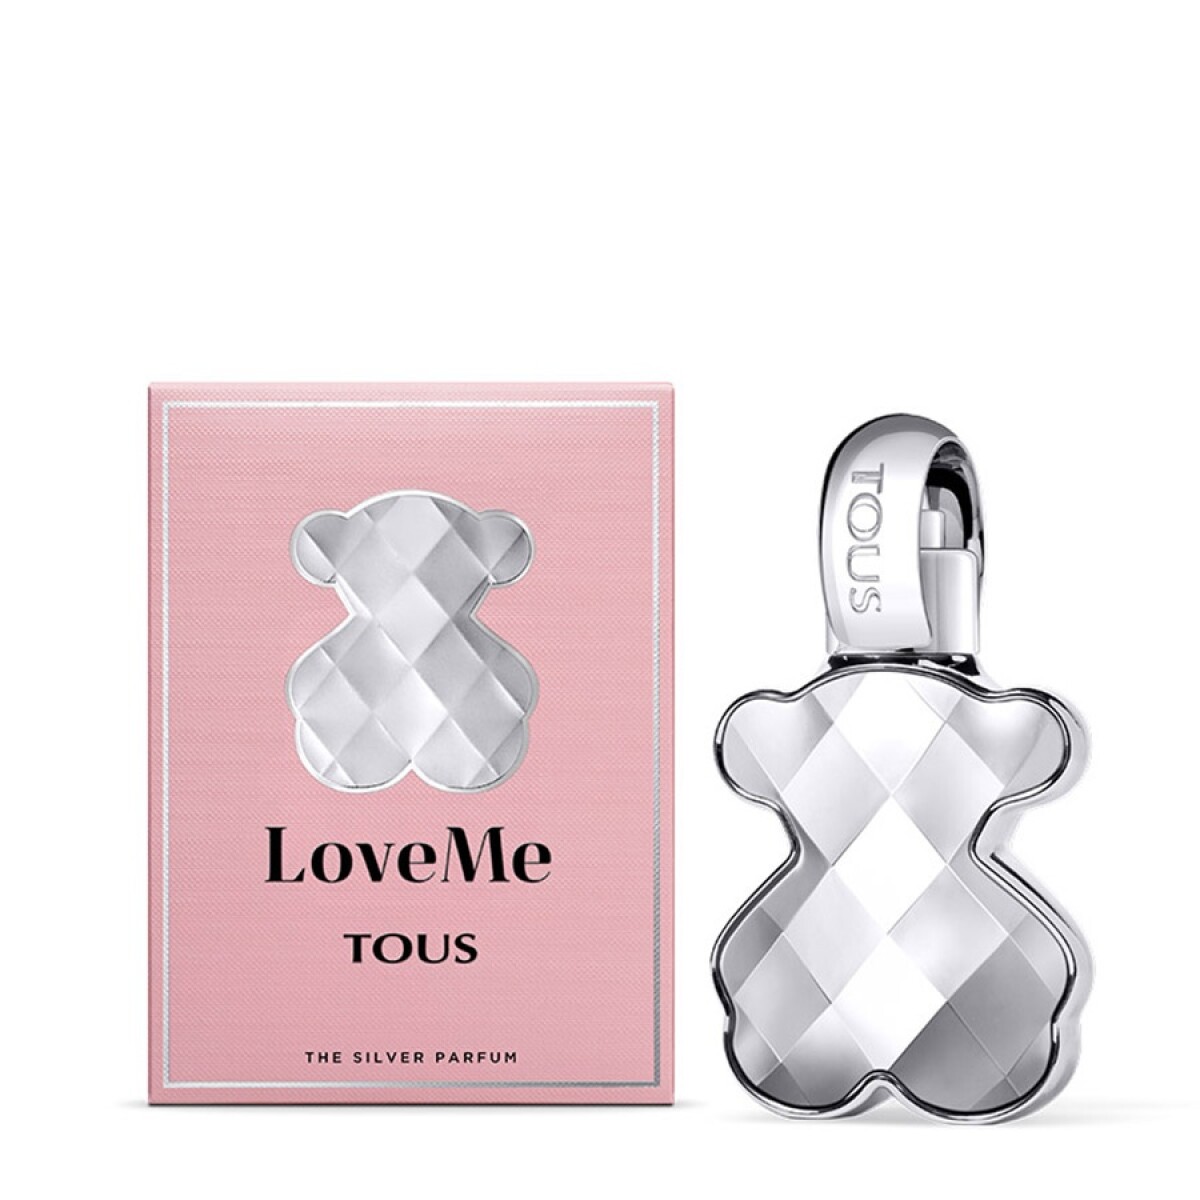 Perfume Tous Love Me Silver Parfum 30 Ml 